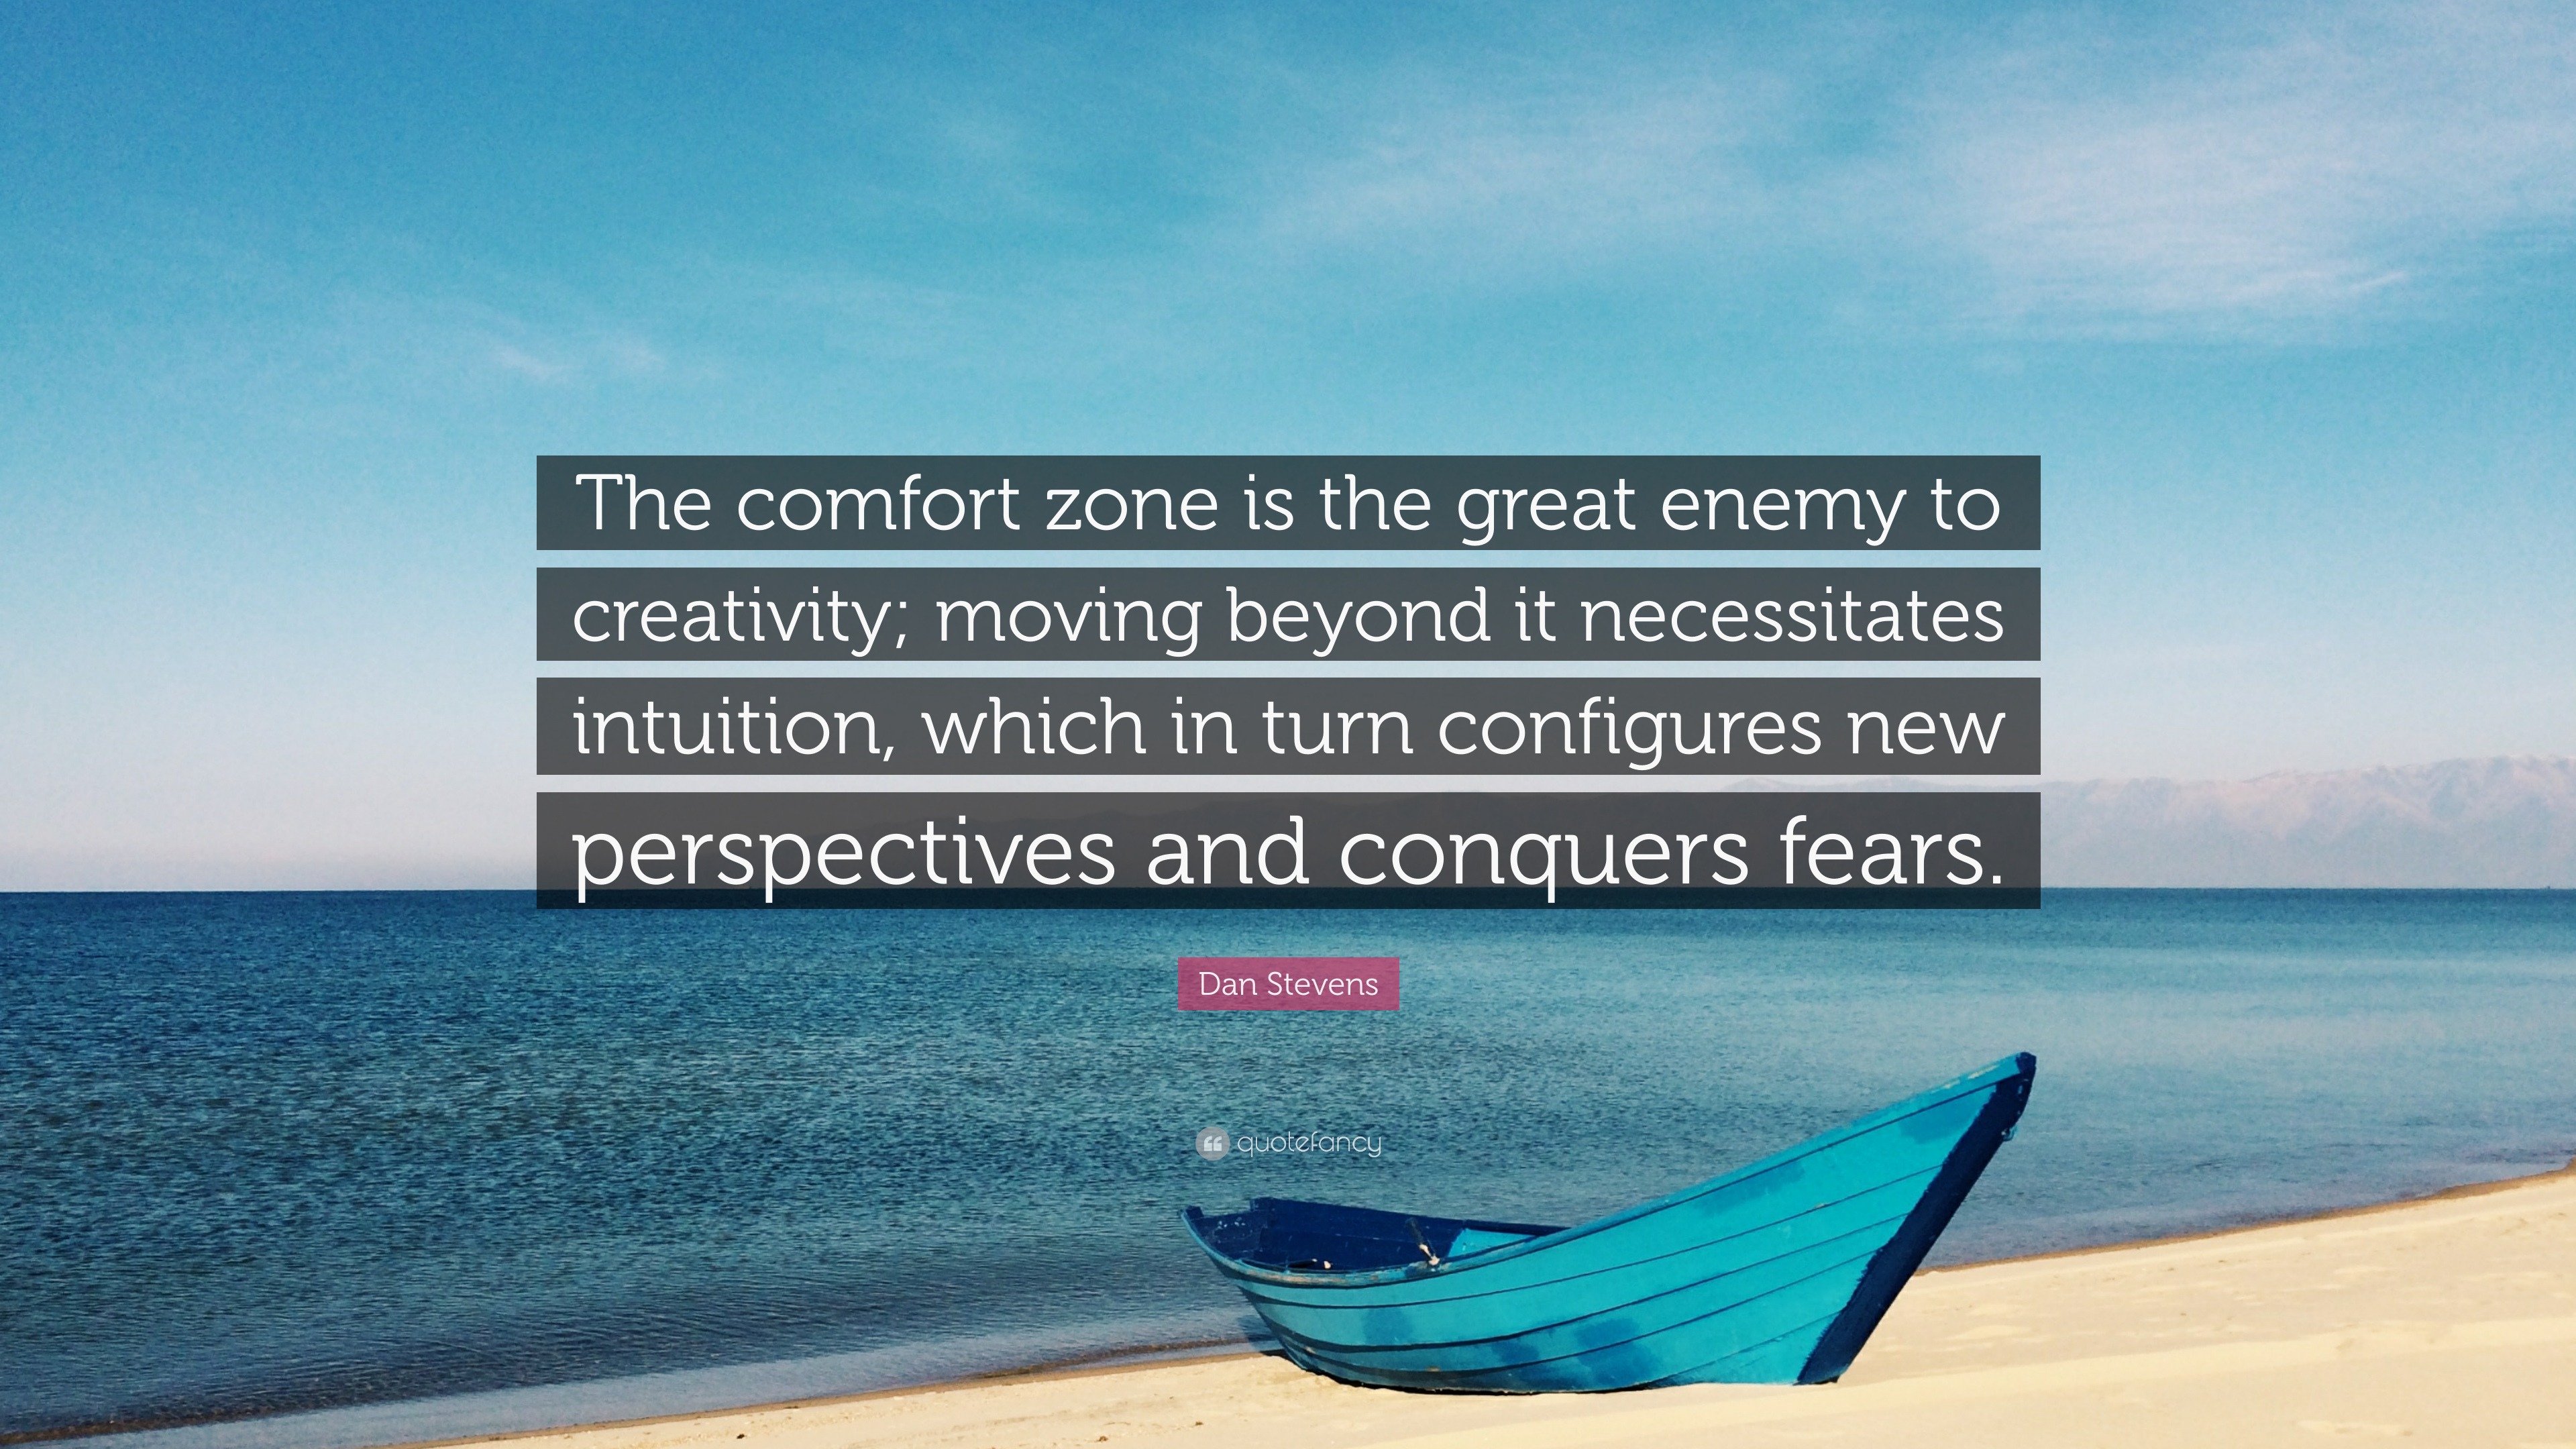 Moving beyond comfort zones